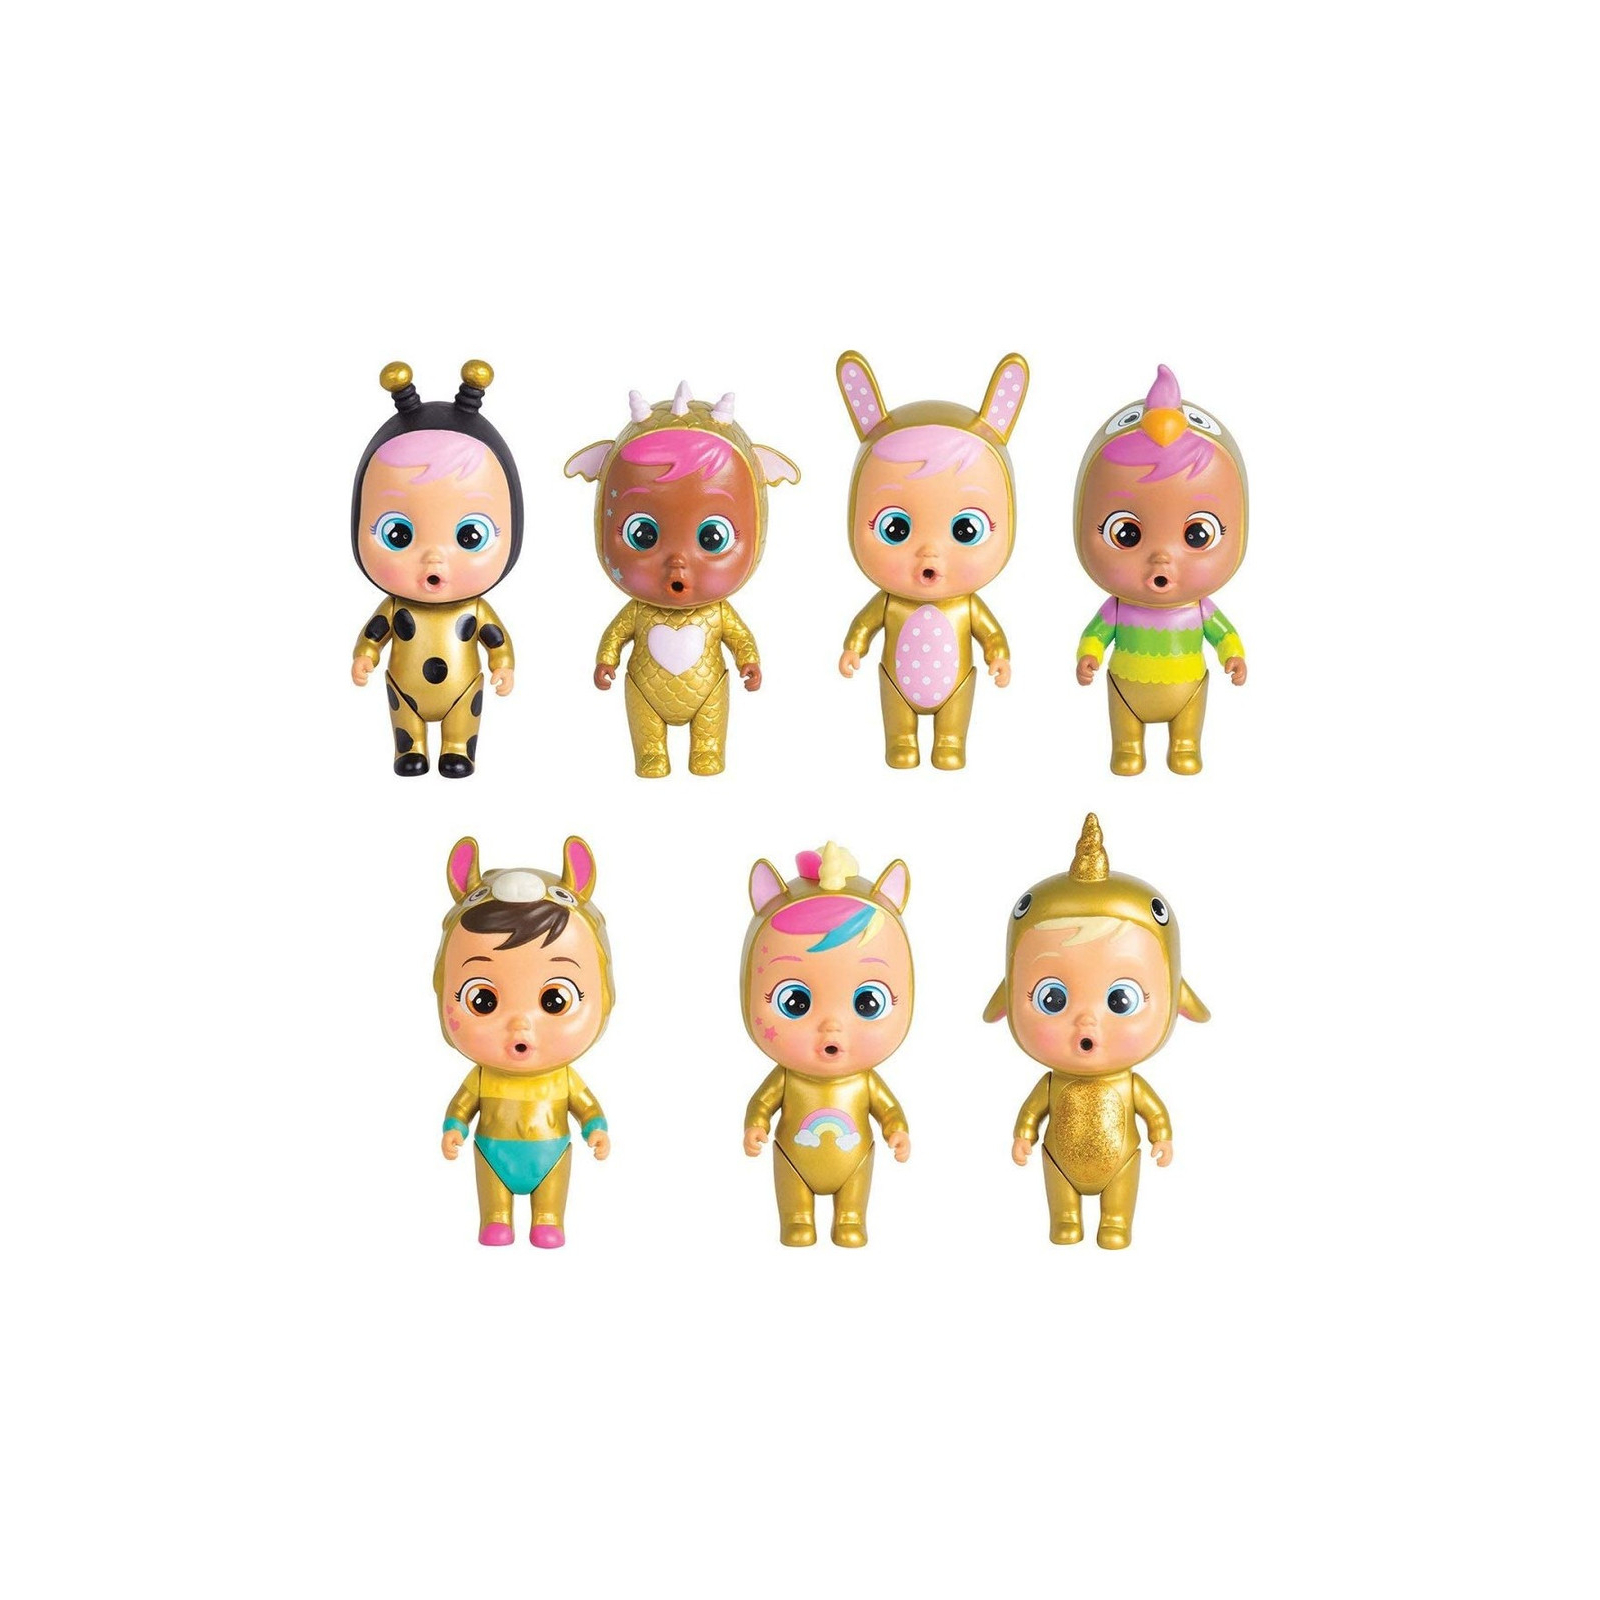 Кукла IMC Toys Cry Babies Magic Tears GOLDEN EDITION (93348) изображение 6